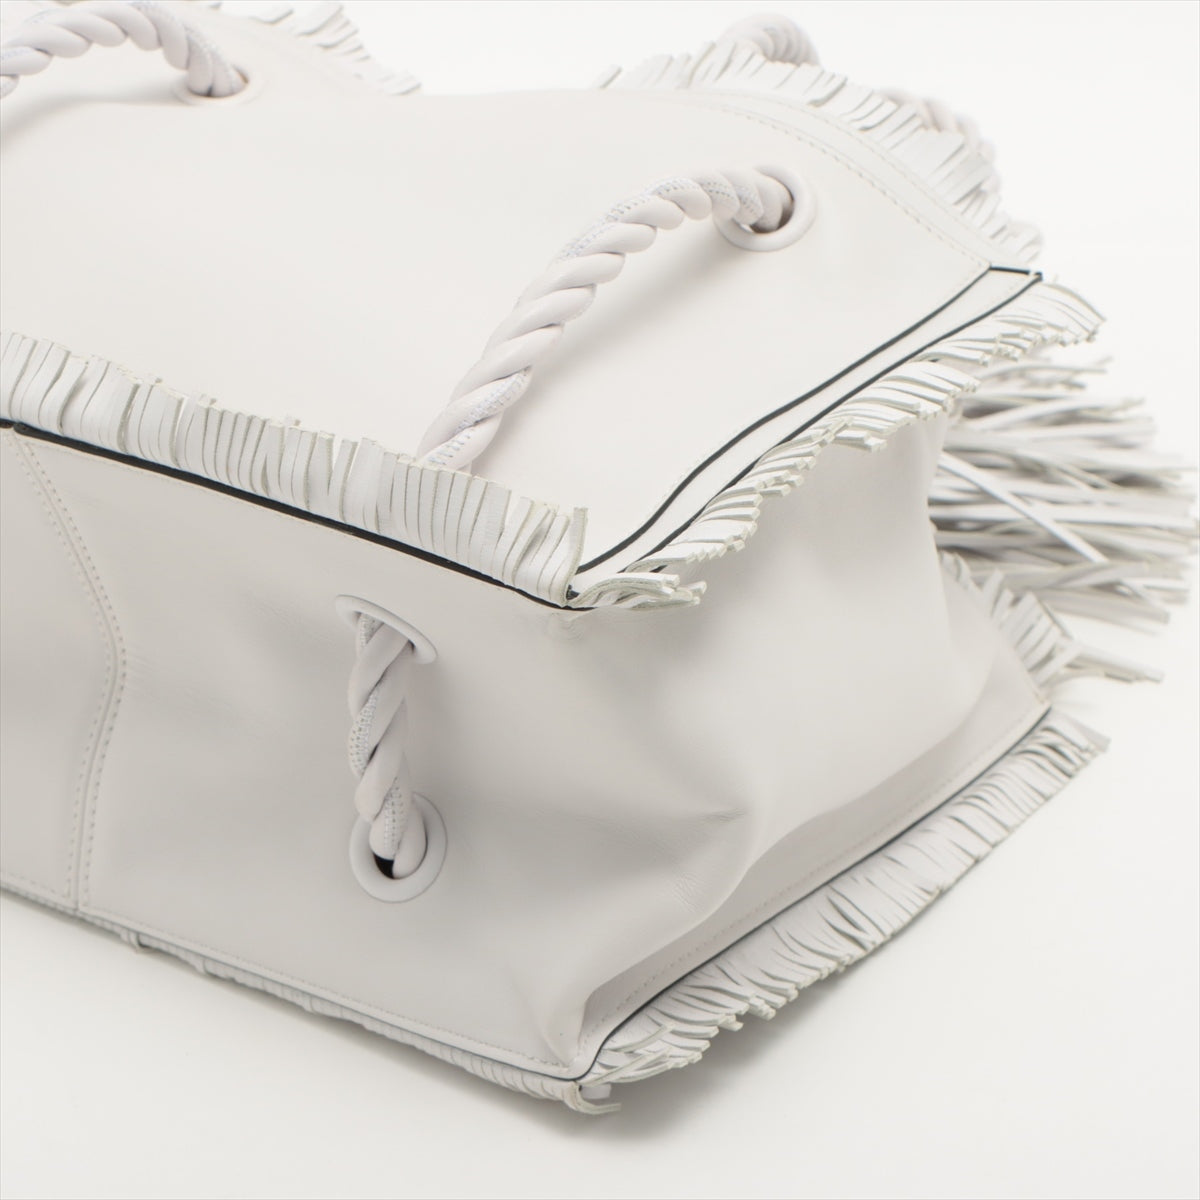 Valentino Garavani Leather Tote Bag White